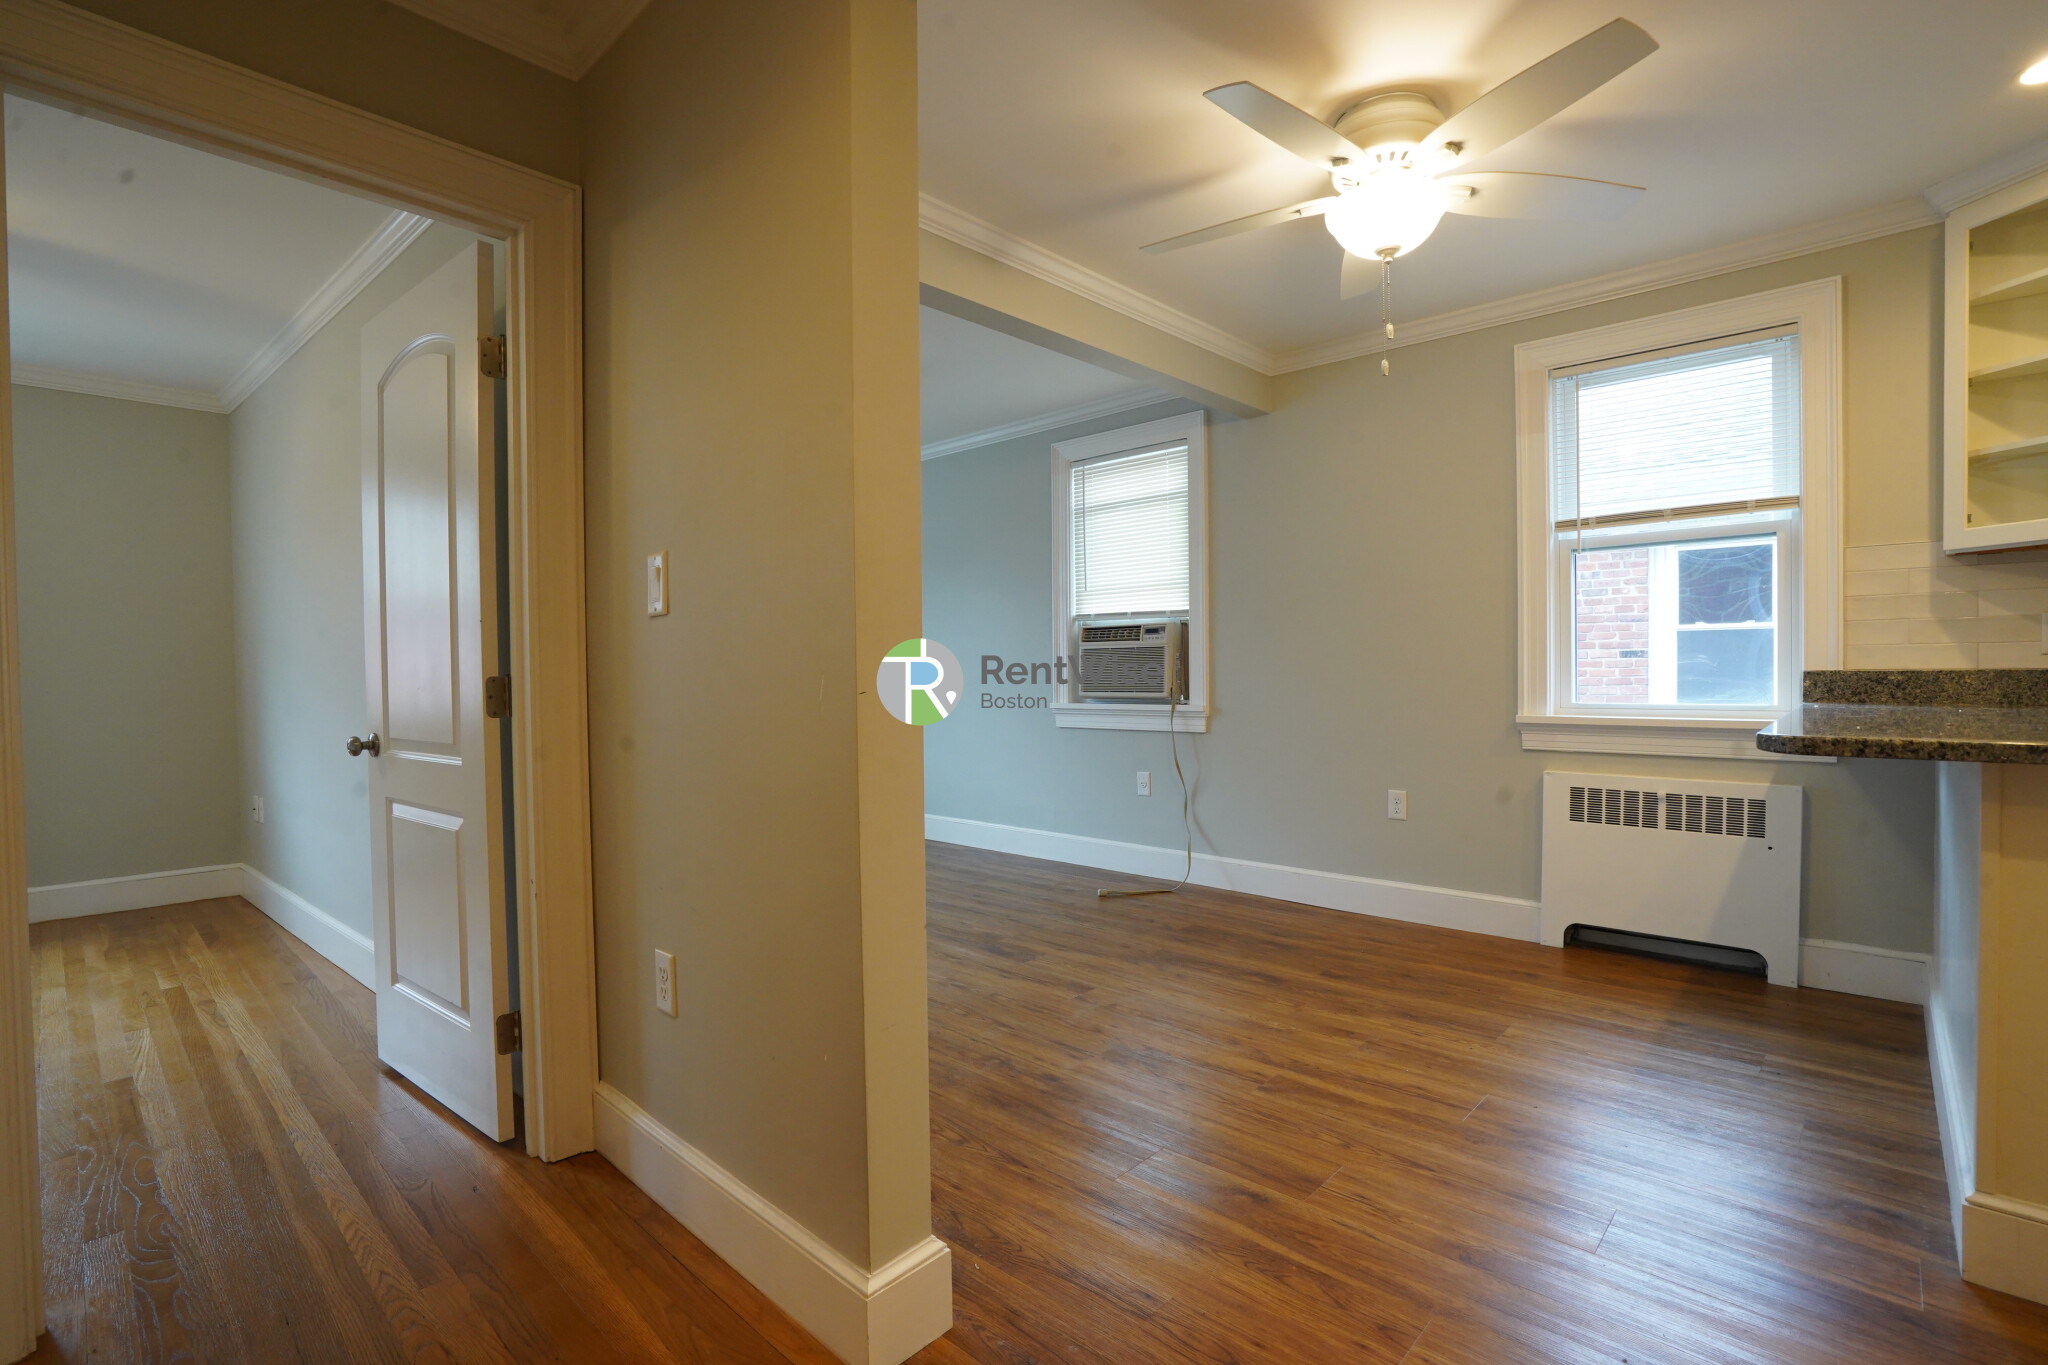 Photos of apartment on Shanley St.,Boston MA 02135